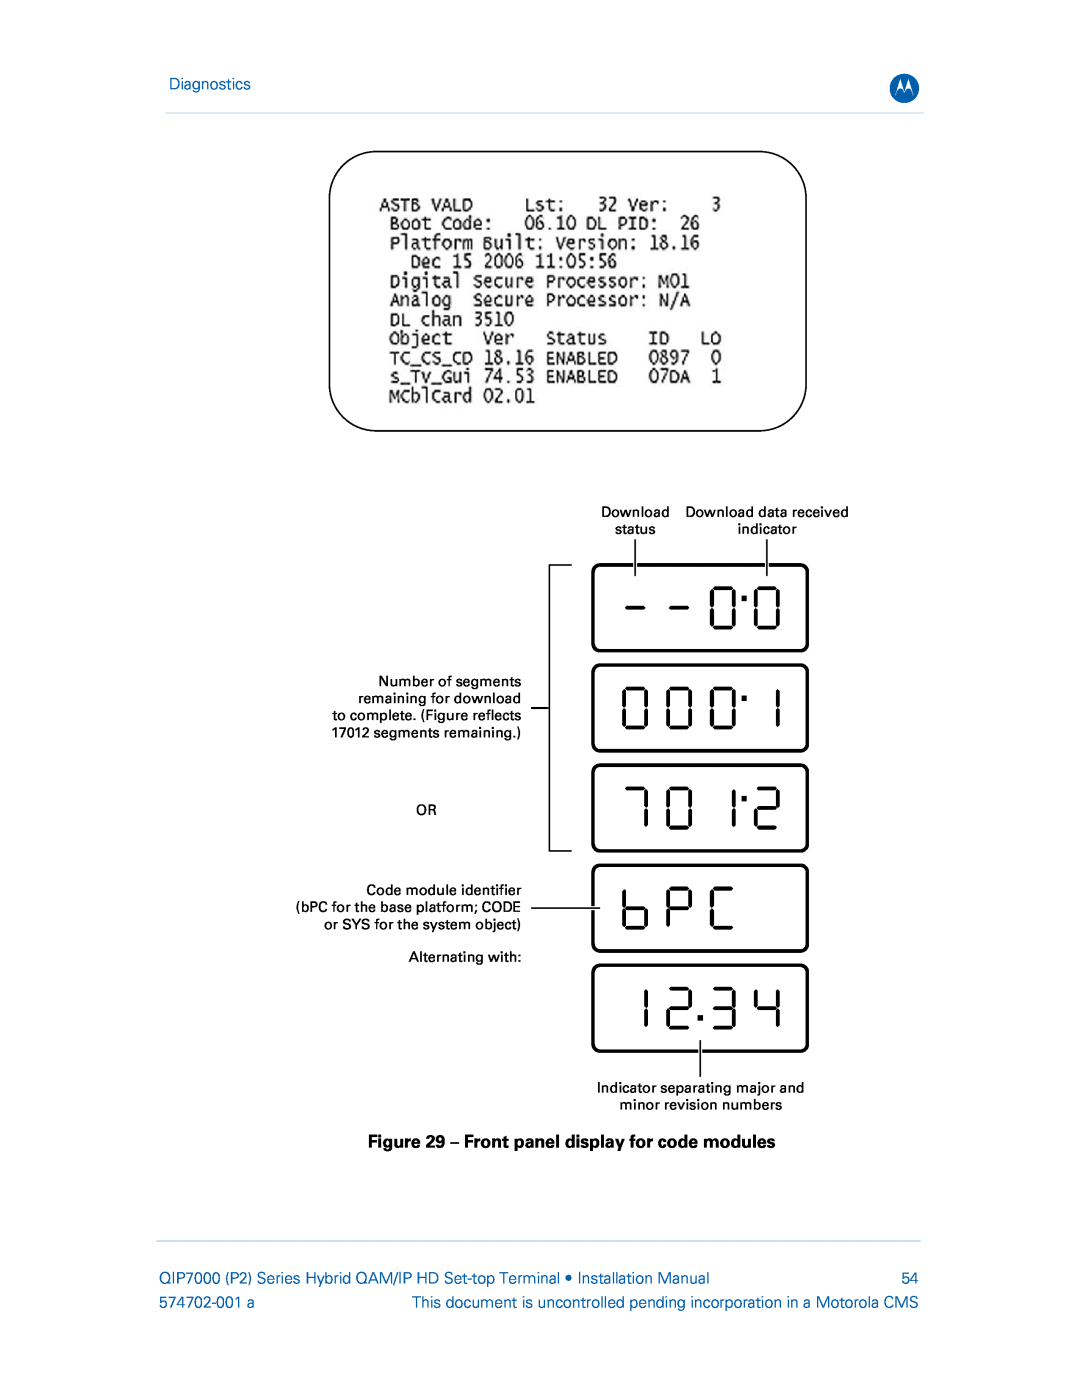 Motorola QIP7000 installation manual Front panel display for code modules, Diagnostics, 574702-001 a 